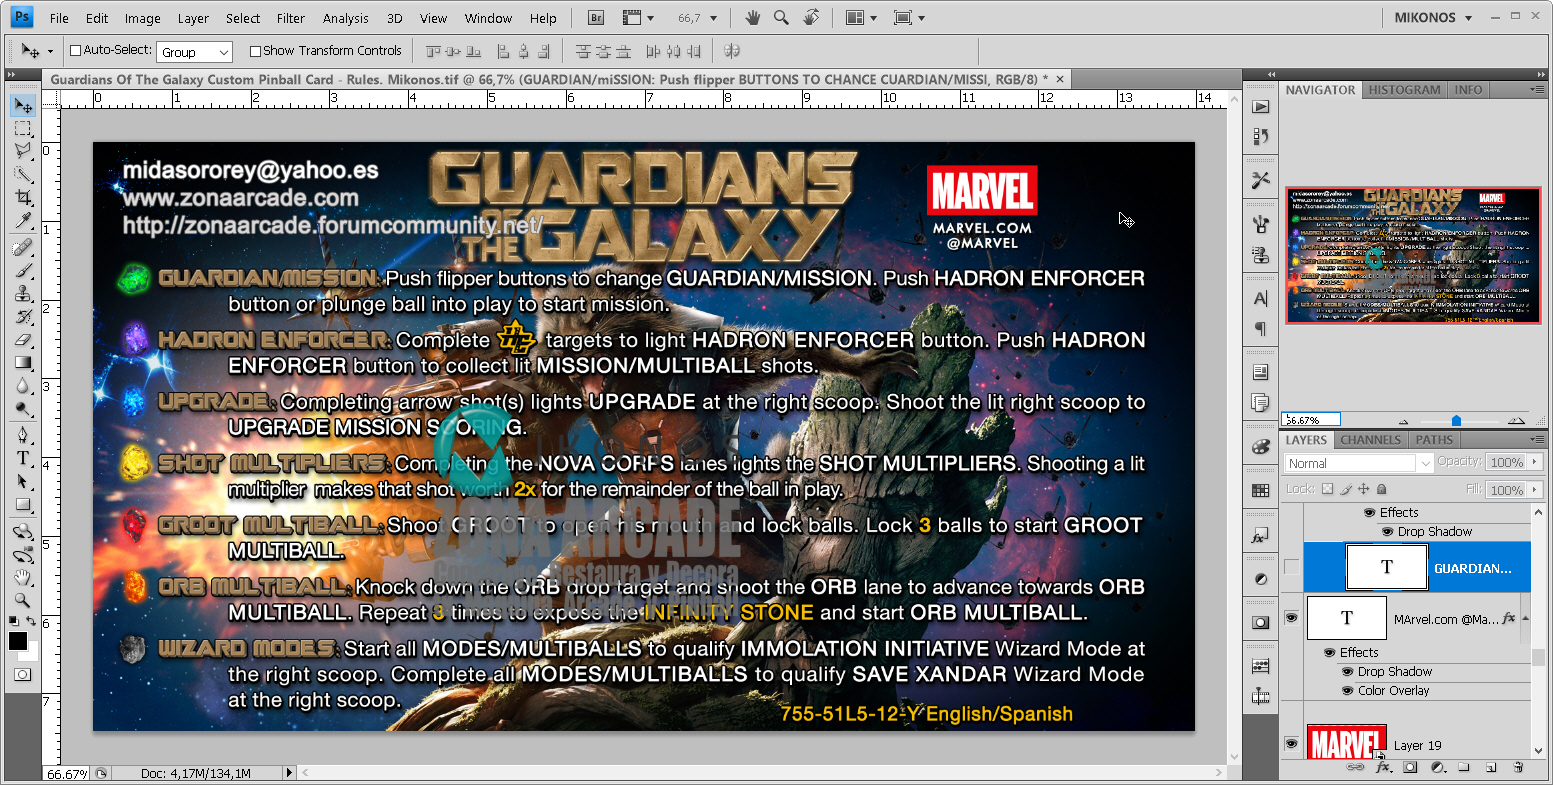 Guardians Of The Galaxy Custom Pinball Card - Rules3. Mikonos1